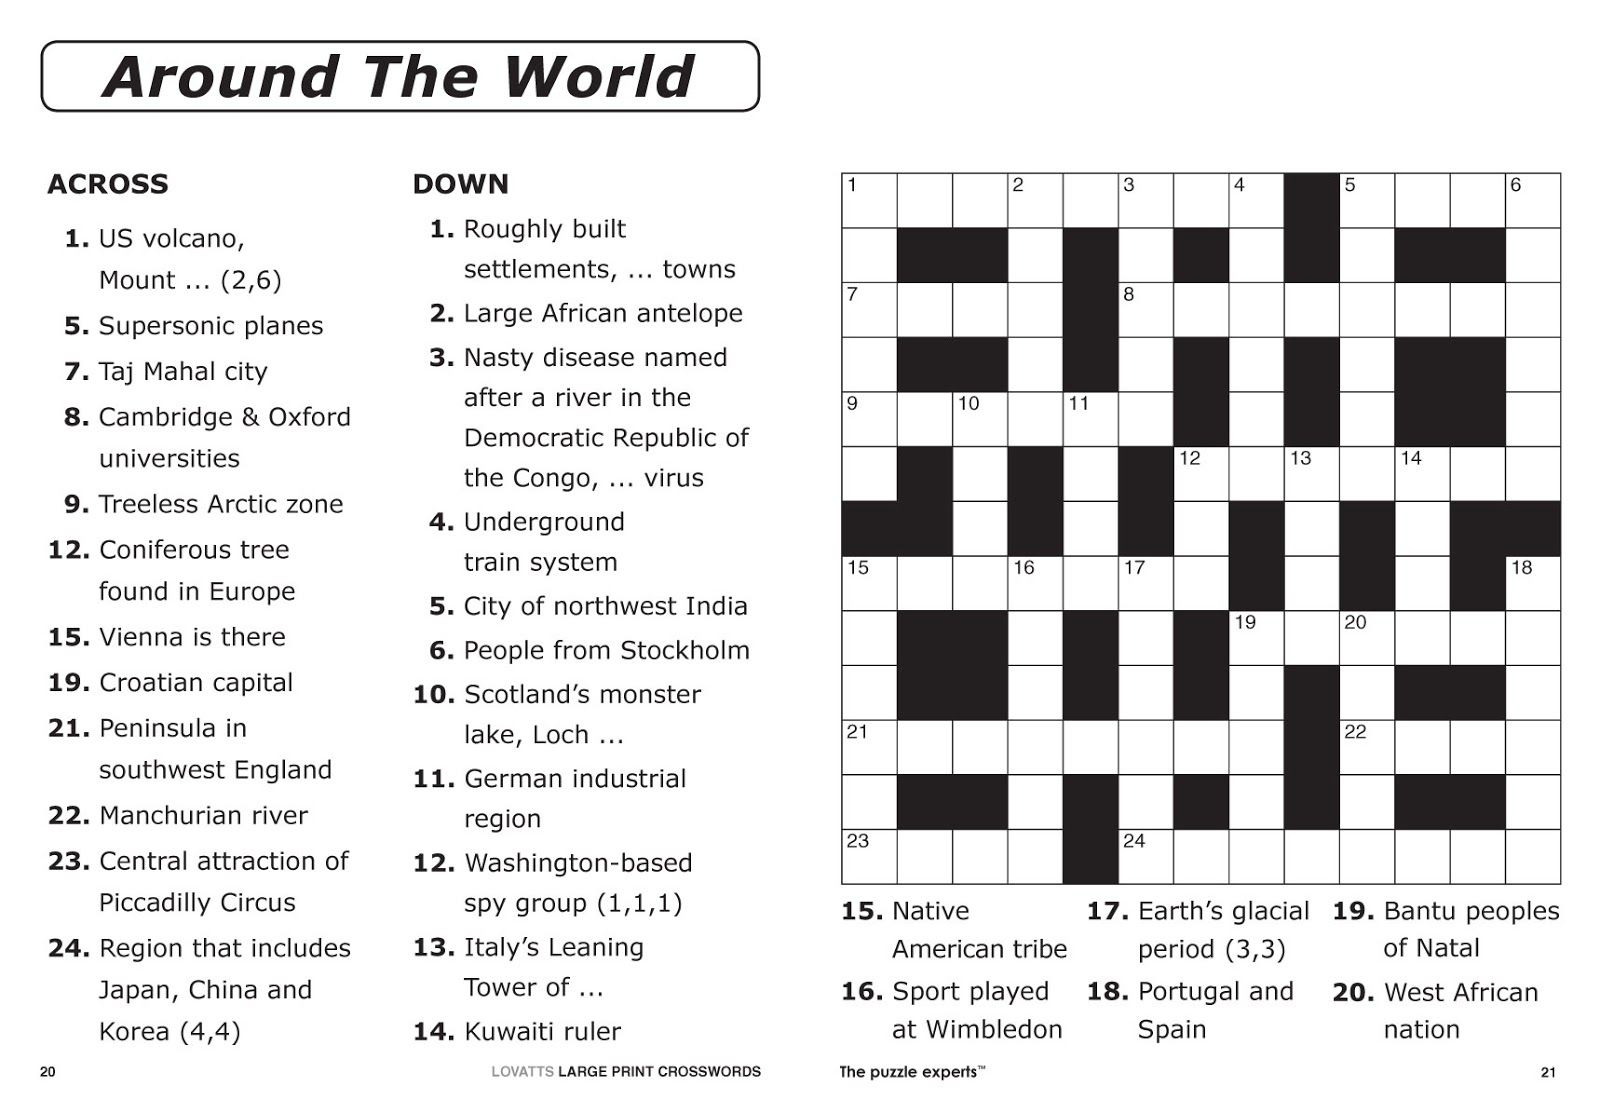 Free Printable Large Print Crossword Puzzles | M3U8 - Easy Printable Crossword Puzzles For Adults